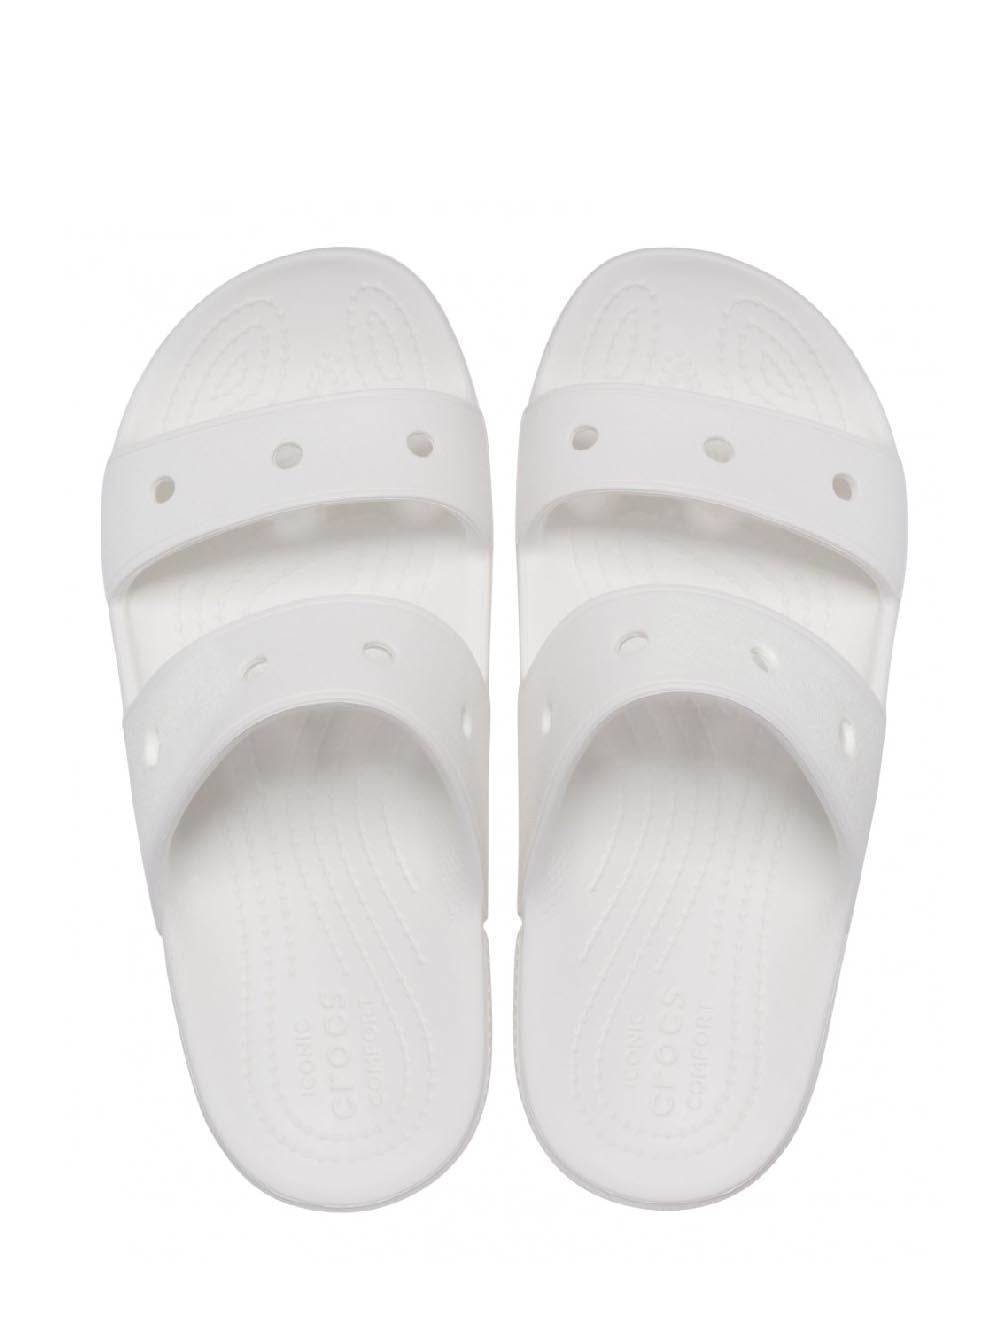 Crocs Sandalo Unisex Bianco